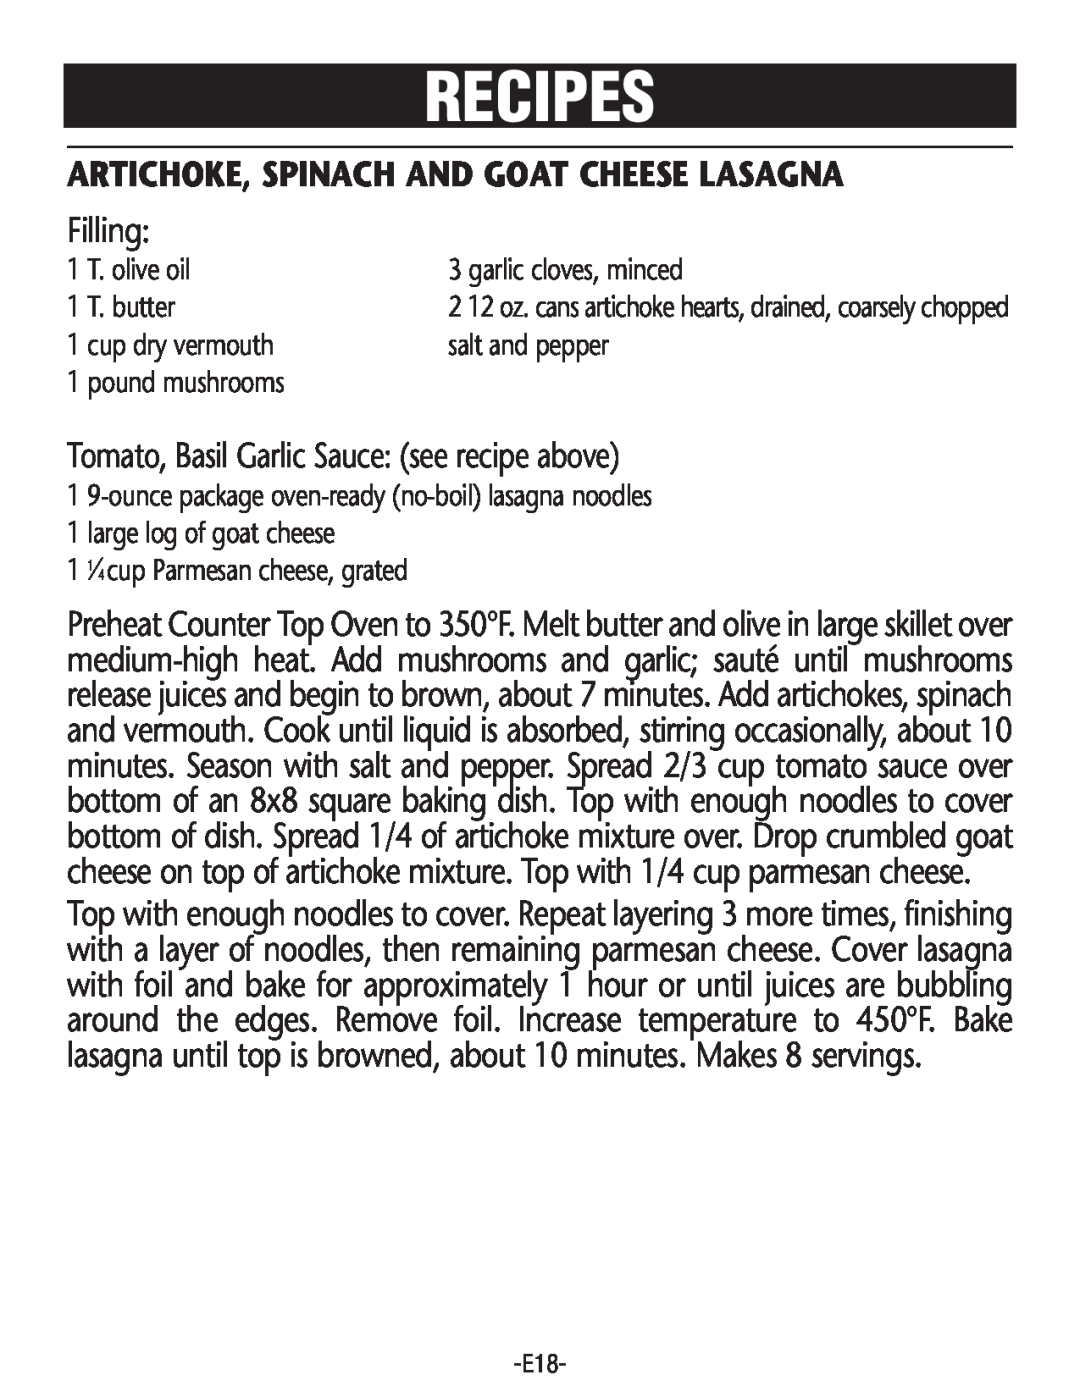 Rival CO602 manual Artichoke, Spinach And Goat Cheese Lasagna, Recipes, Filling, Tomato,Basil Garlic Sauce see recipe above 